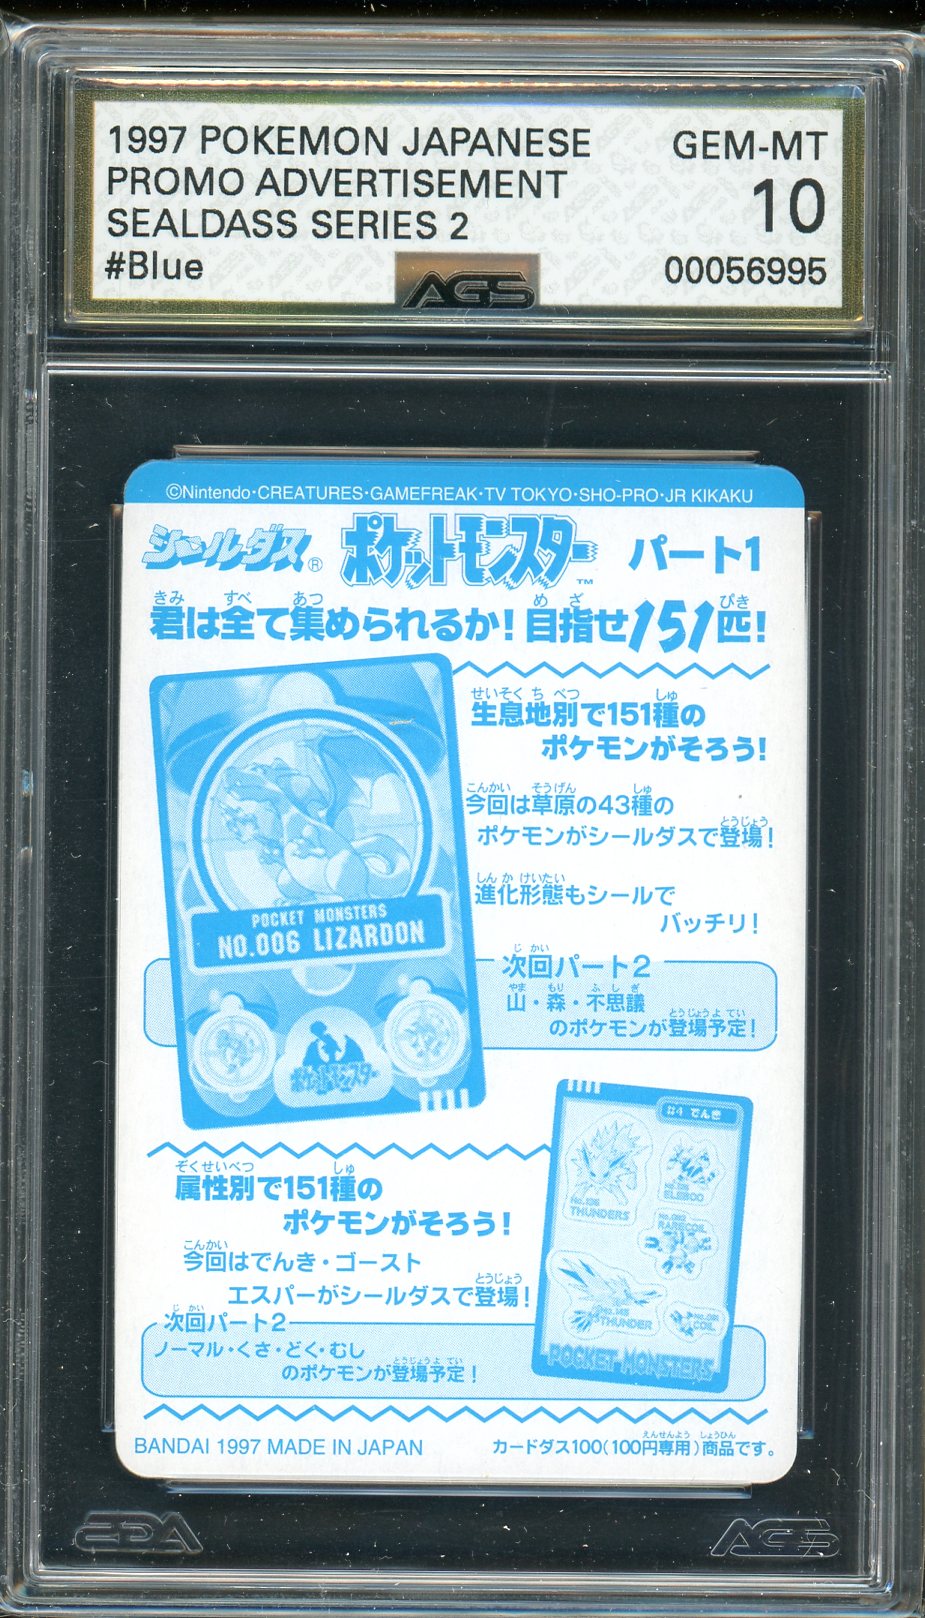 AGS (GEM-MT 10) Promo Advertisement #Blue (Japanese) - Sealdass (#00056995)